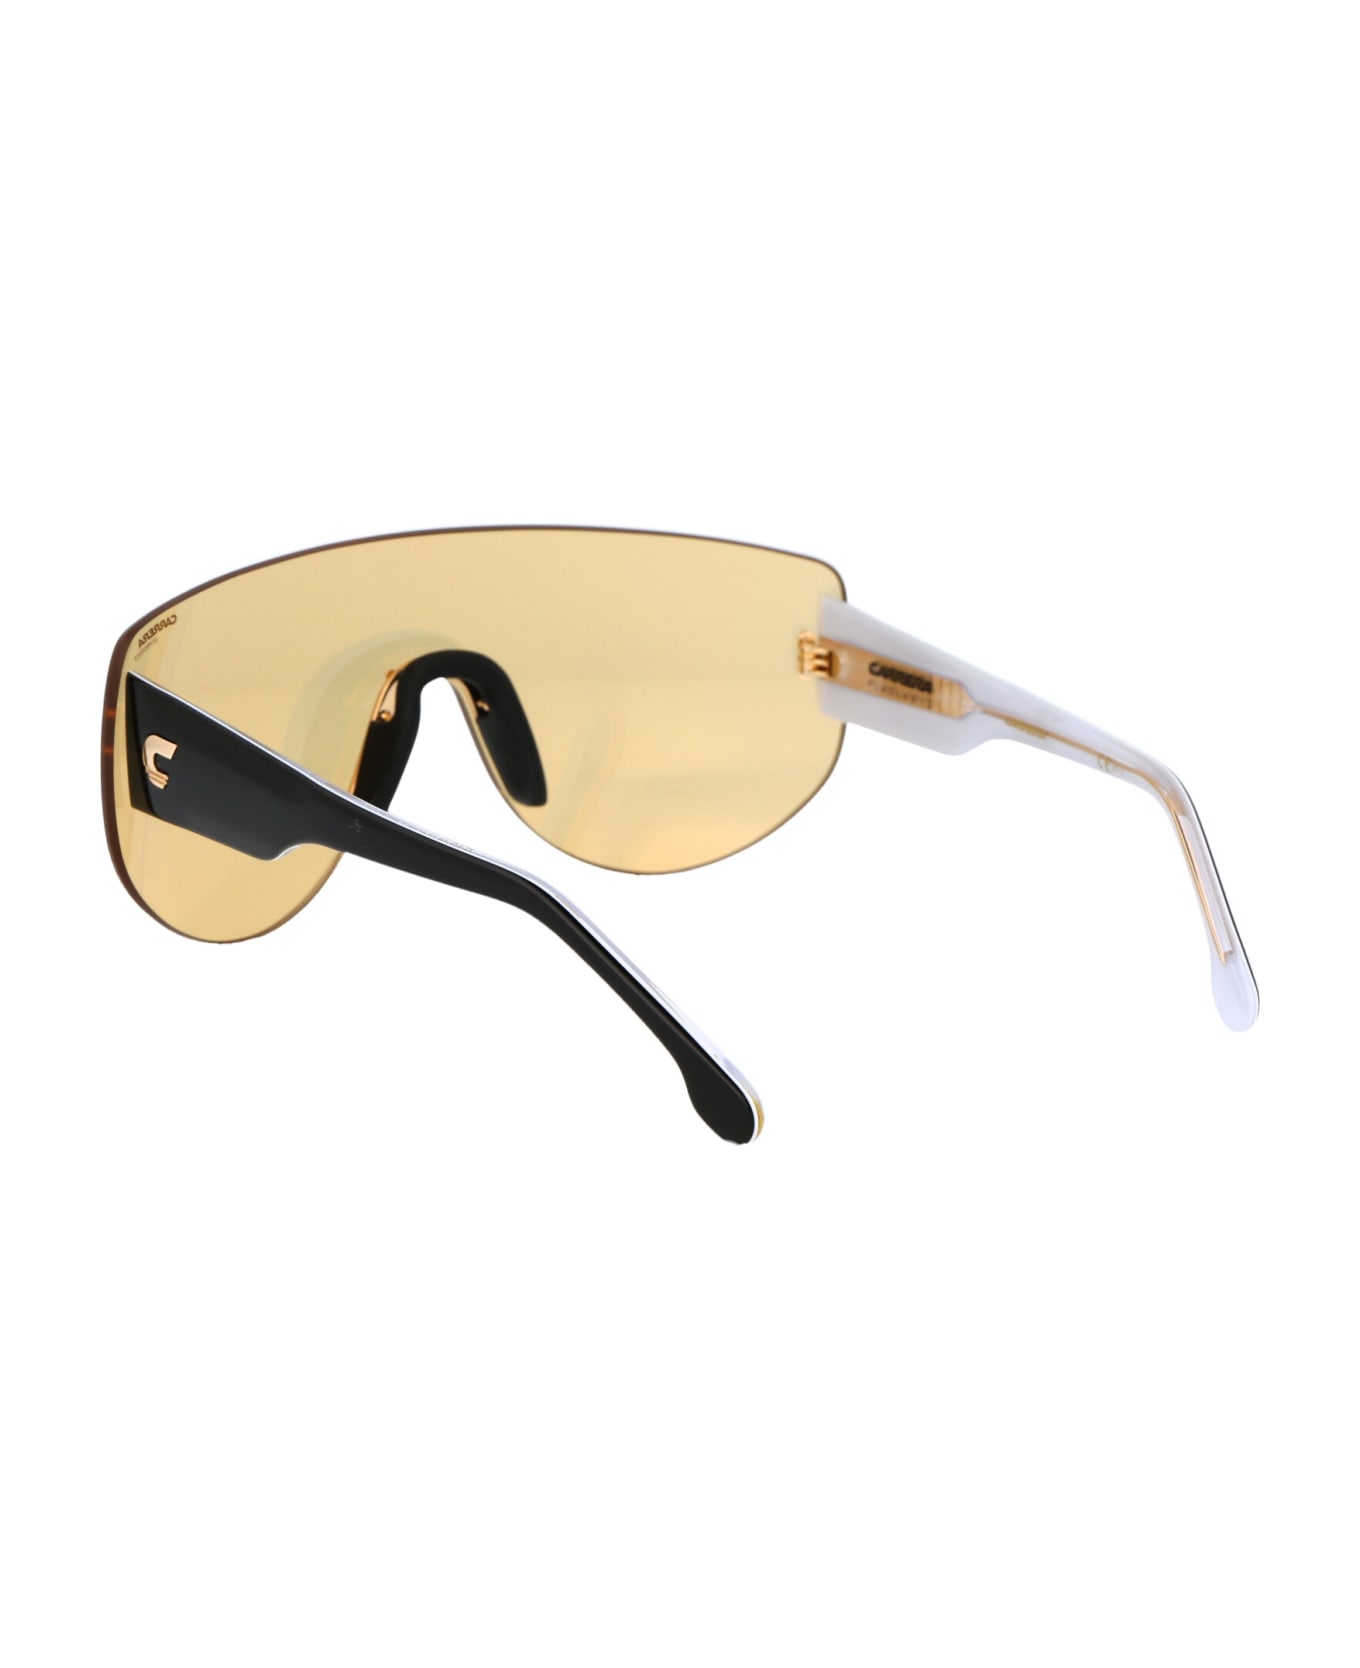 Carrera Flaglab 12 Sunglasses - 4CWET YELLOW BLACK